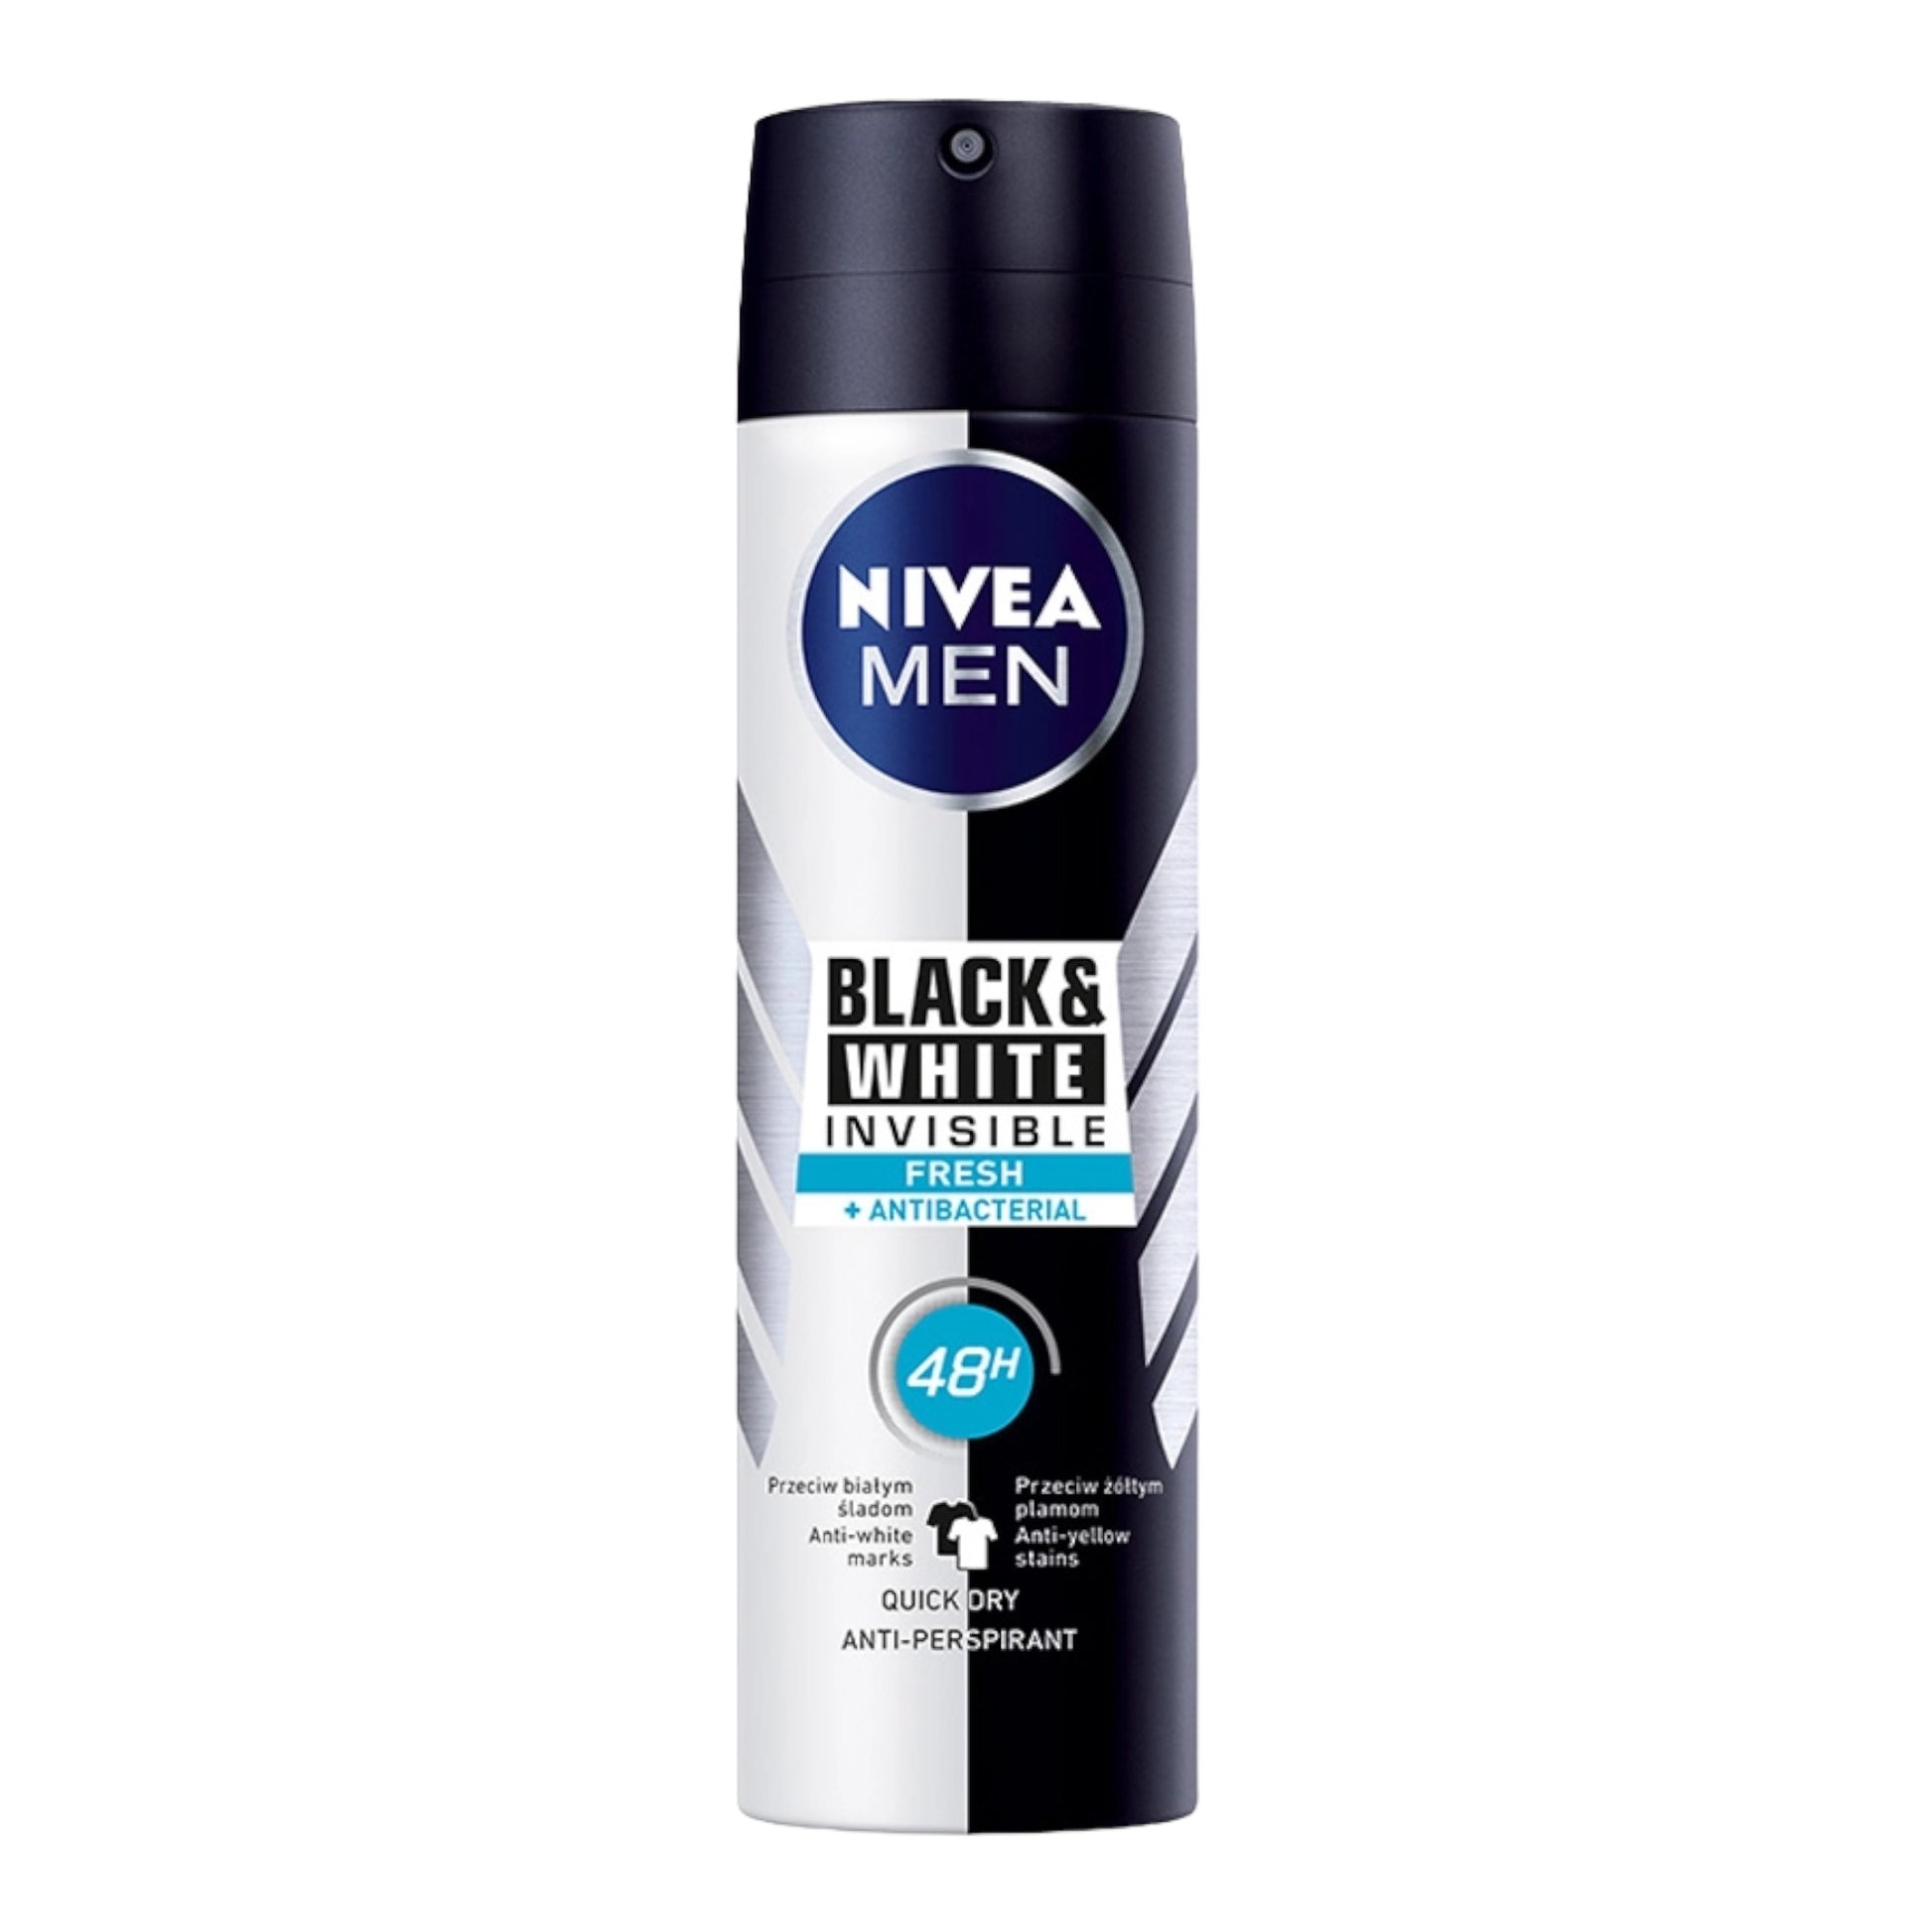 Nivea Men Invisible Black & White FRESH anti-perspirant spray 150ml